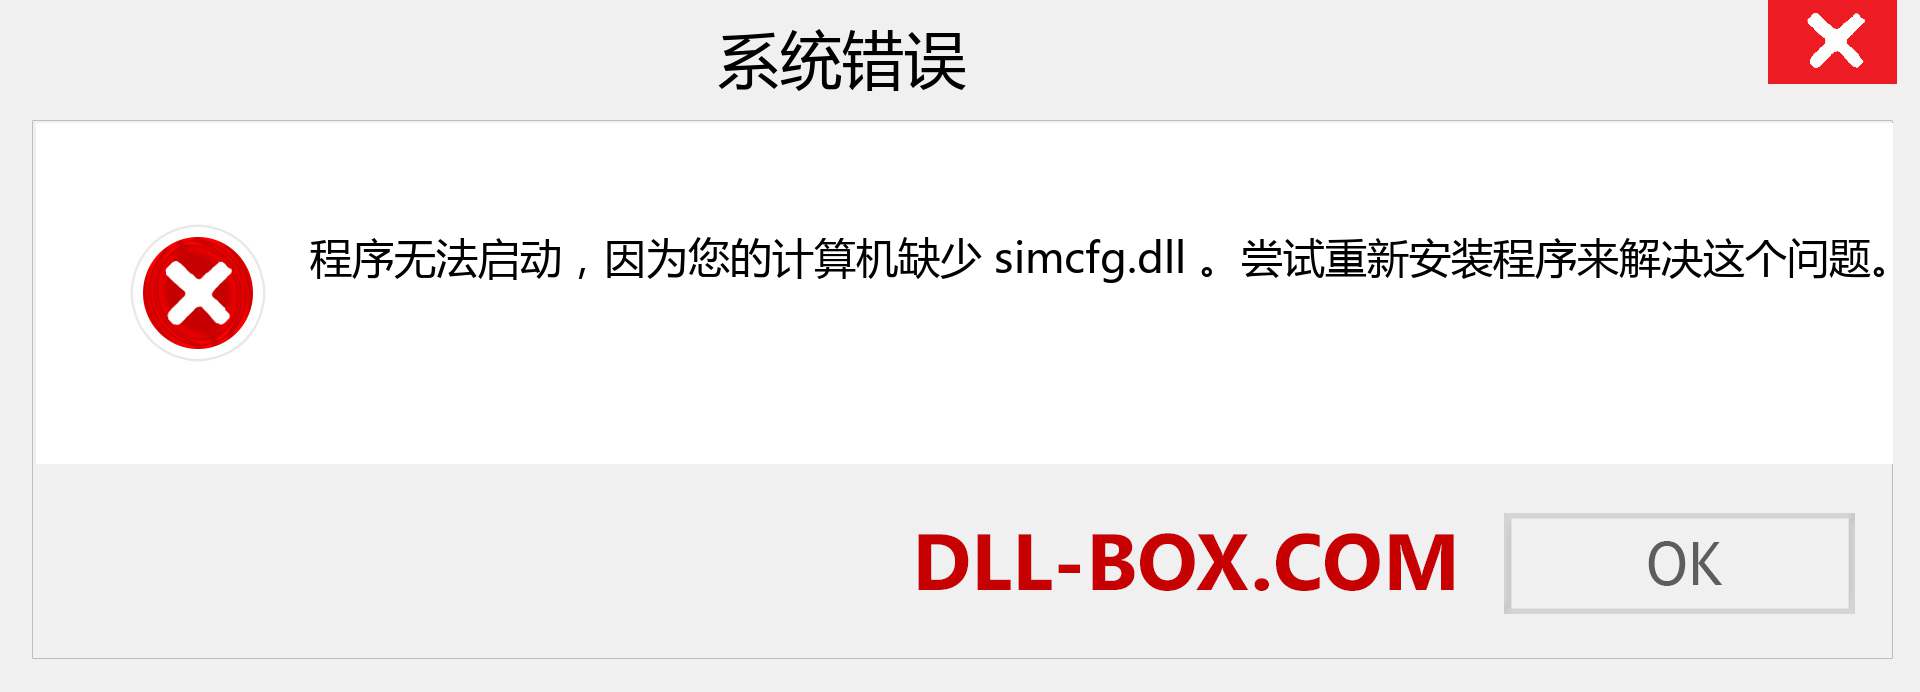 simcfg.dll 文件丢失？。 适用于 Windows 7、8、10 的下载 - 修复 Windows、照片、图像上的 simcfg dll 丢失错误